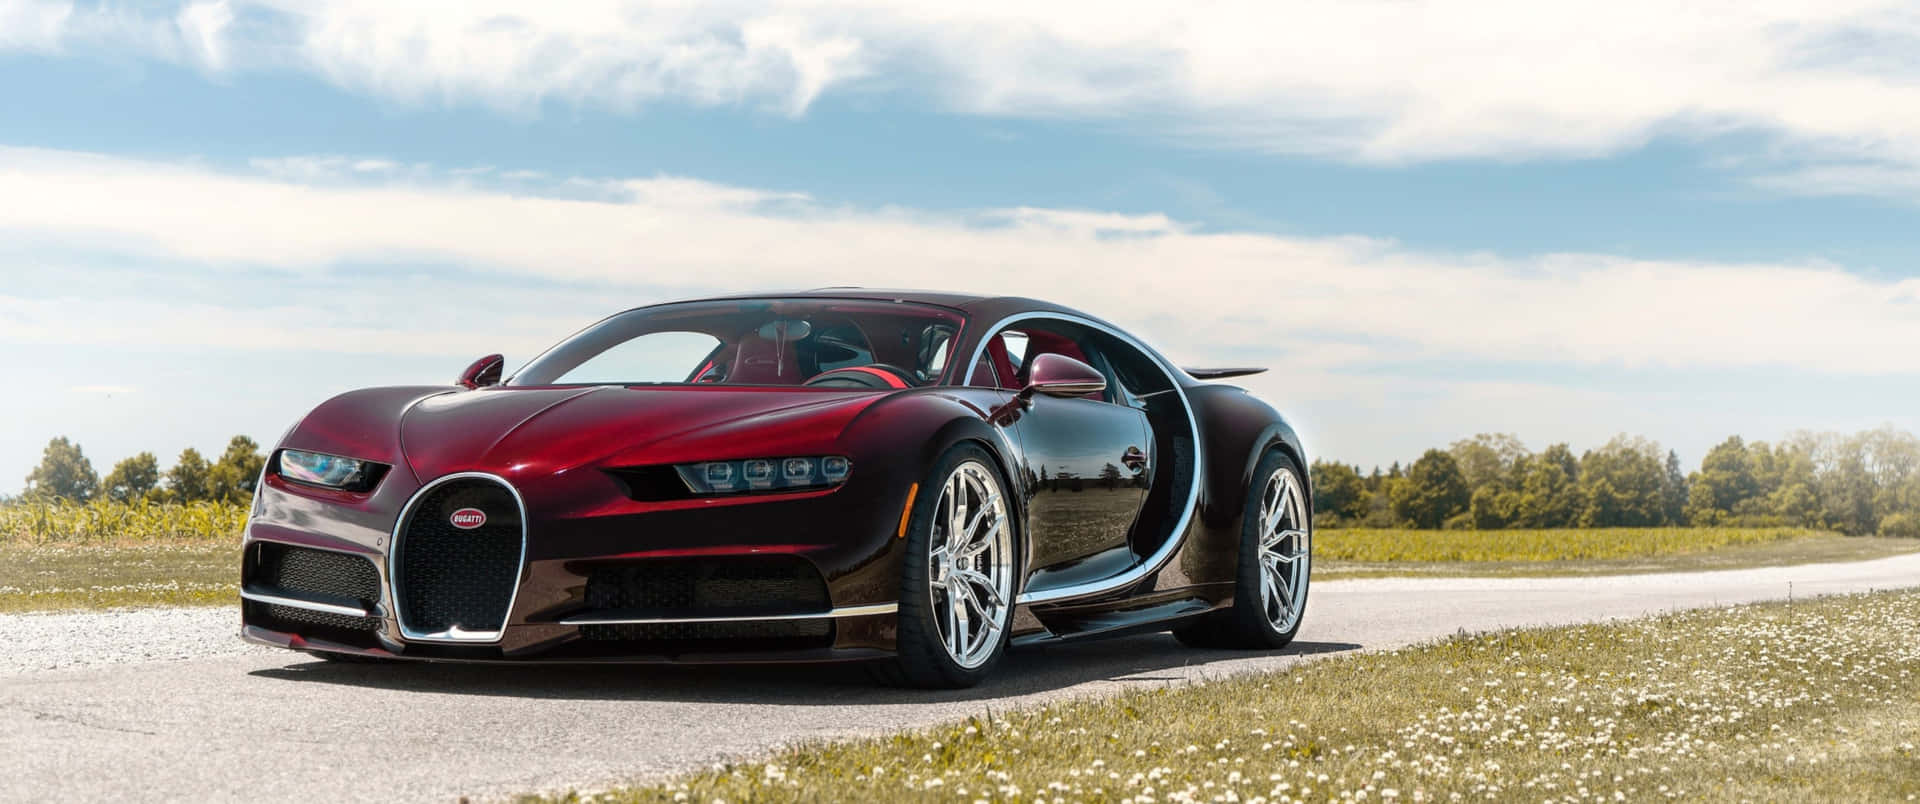 Hotwheels! Dai Un'occhiata A Questa Splendida Bugatti Chiron Sport In Condizioni Perfette.